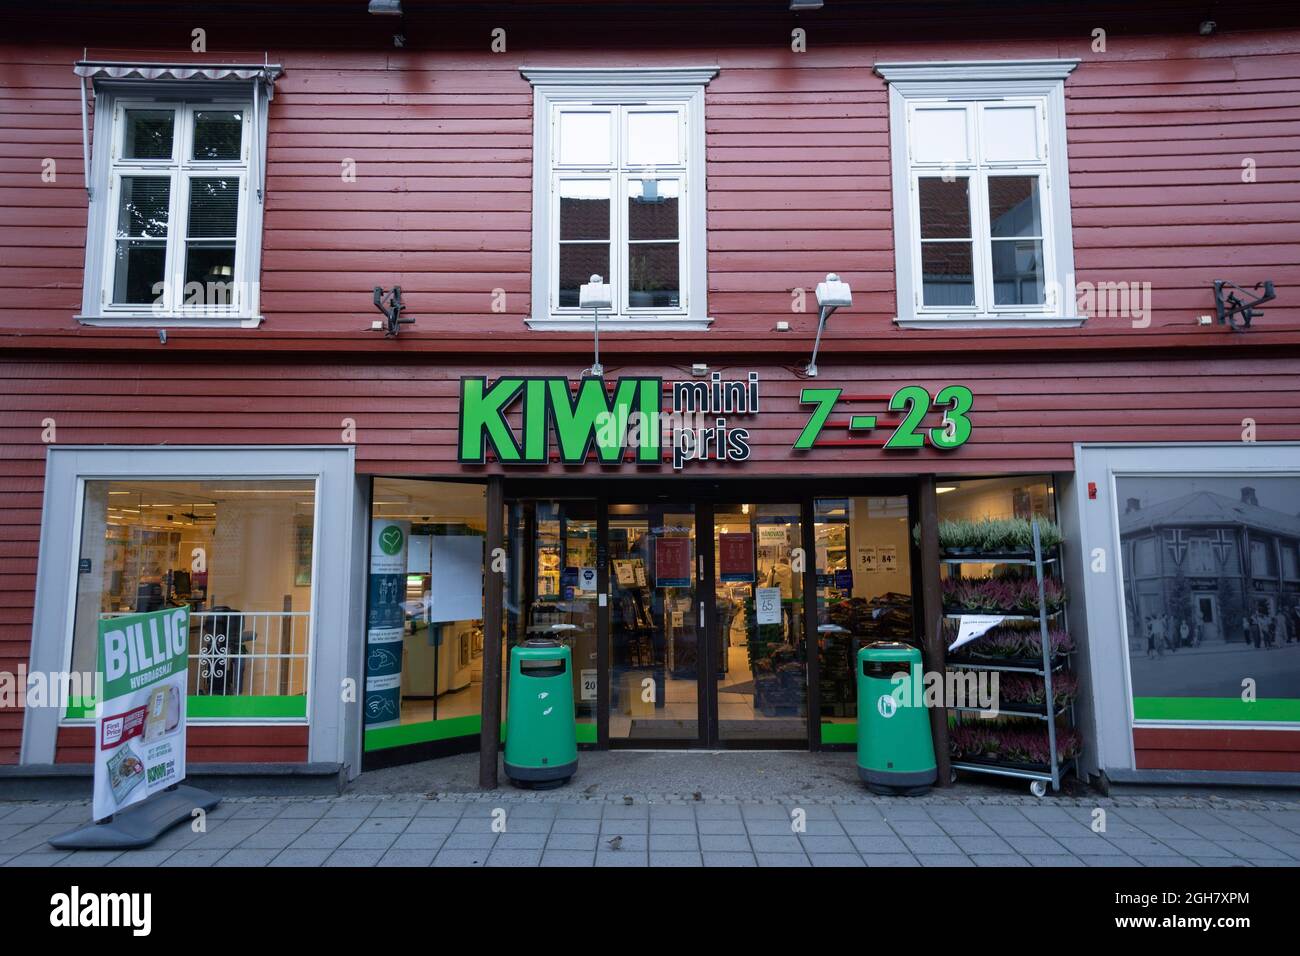 Kiwi Mini Pris in Lillehammer, Europe Stock Photo - Alamy